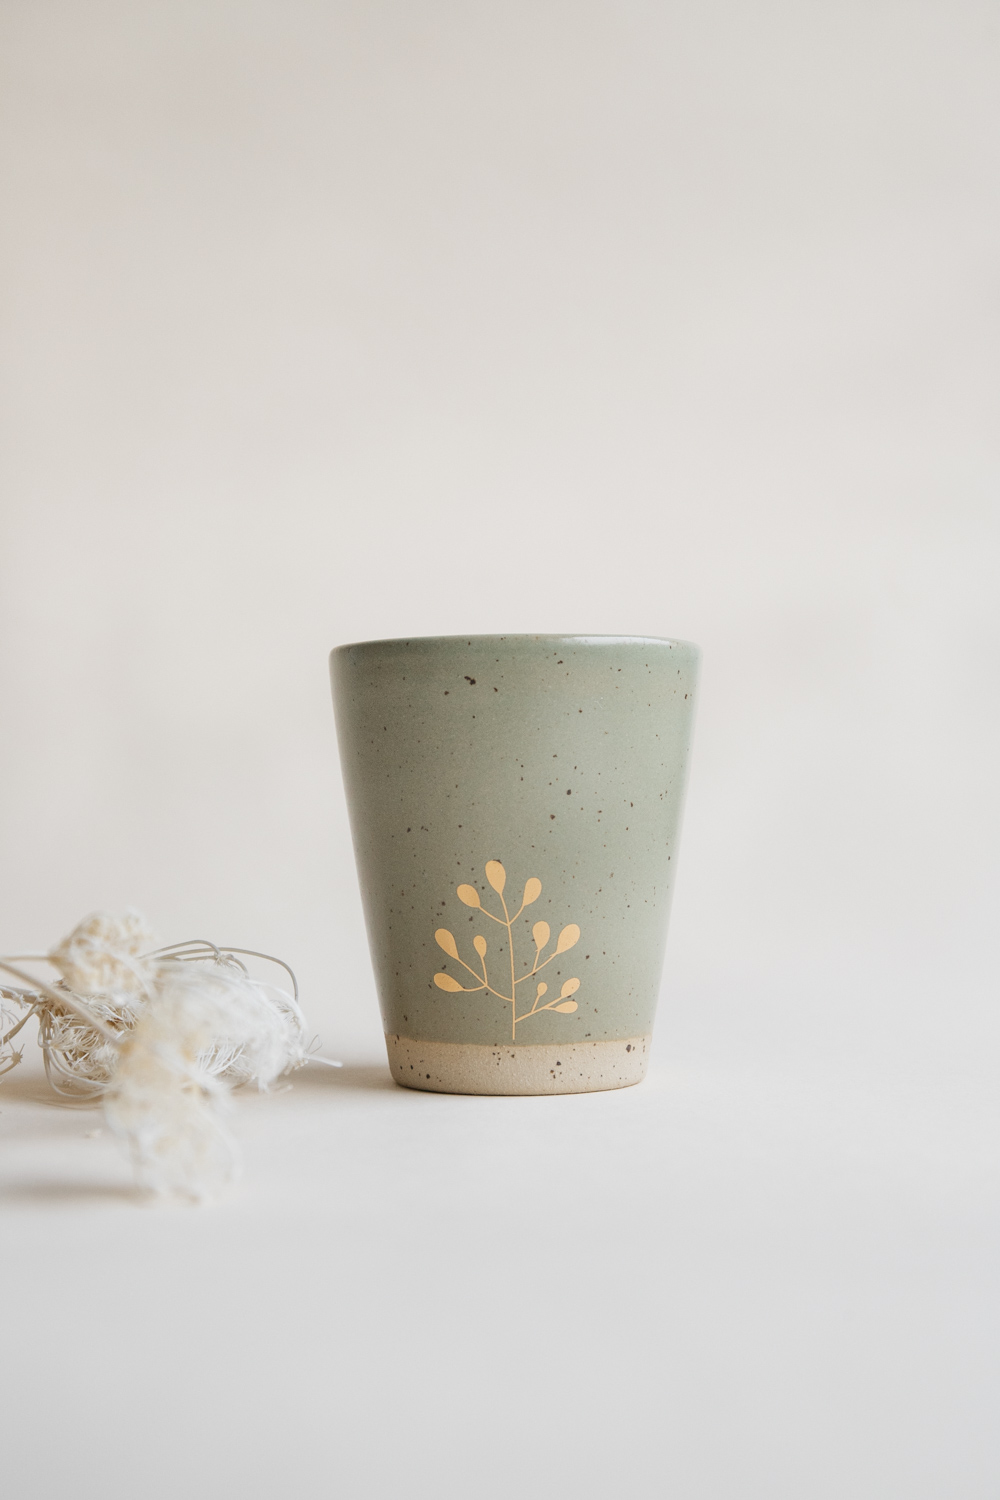 Marinski Handmade Ceramic Cup - Olive Green